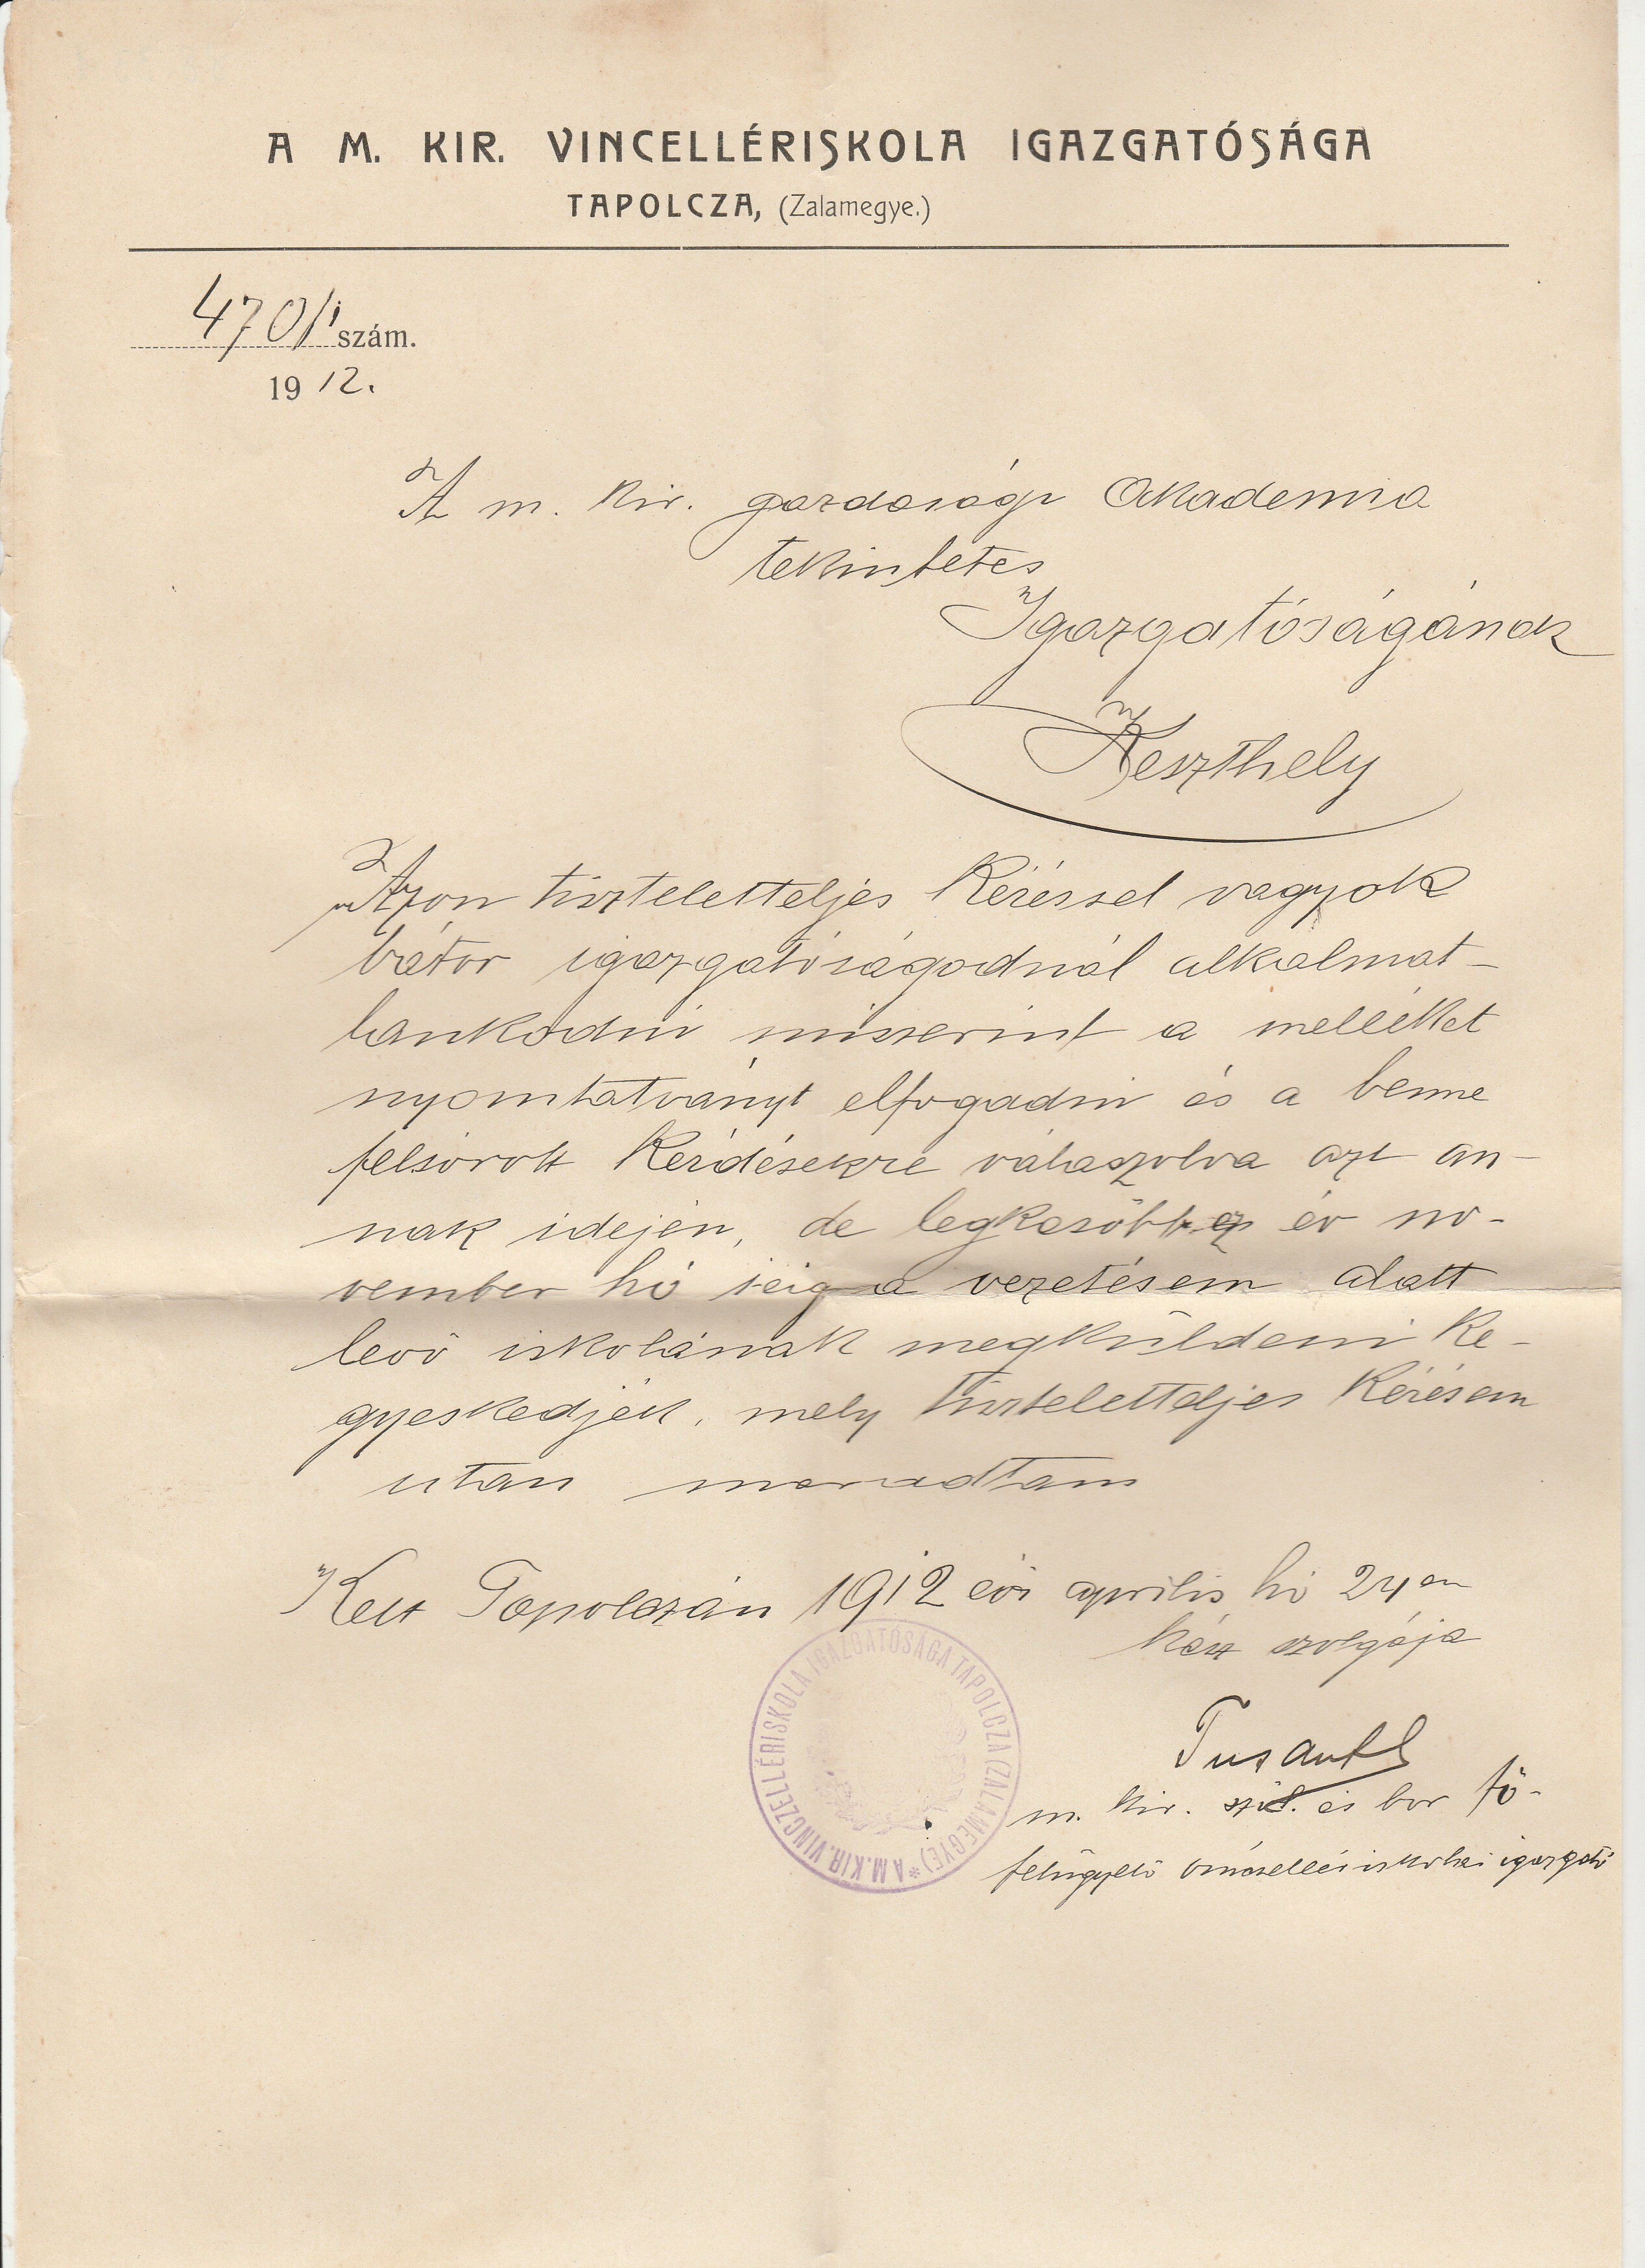 A tapolcai vincellériskola kísérőlevele egy kérdőívhez (Tapolcai Városi Múzeum CC BY-NC-SA)